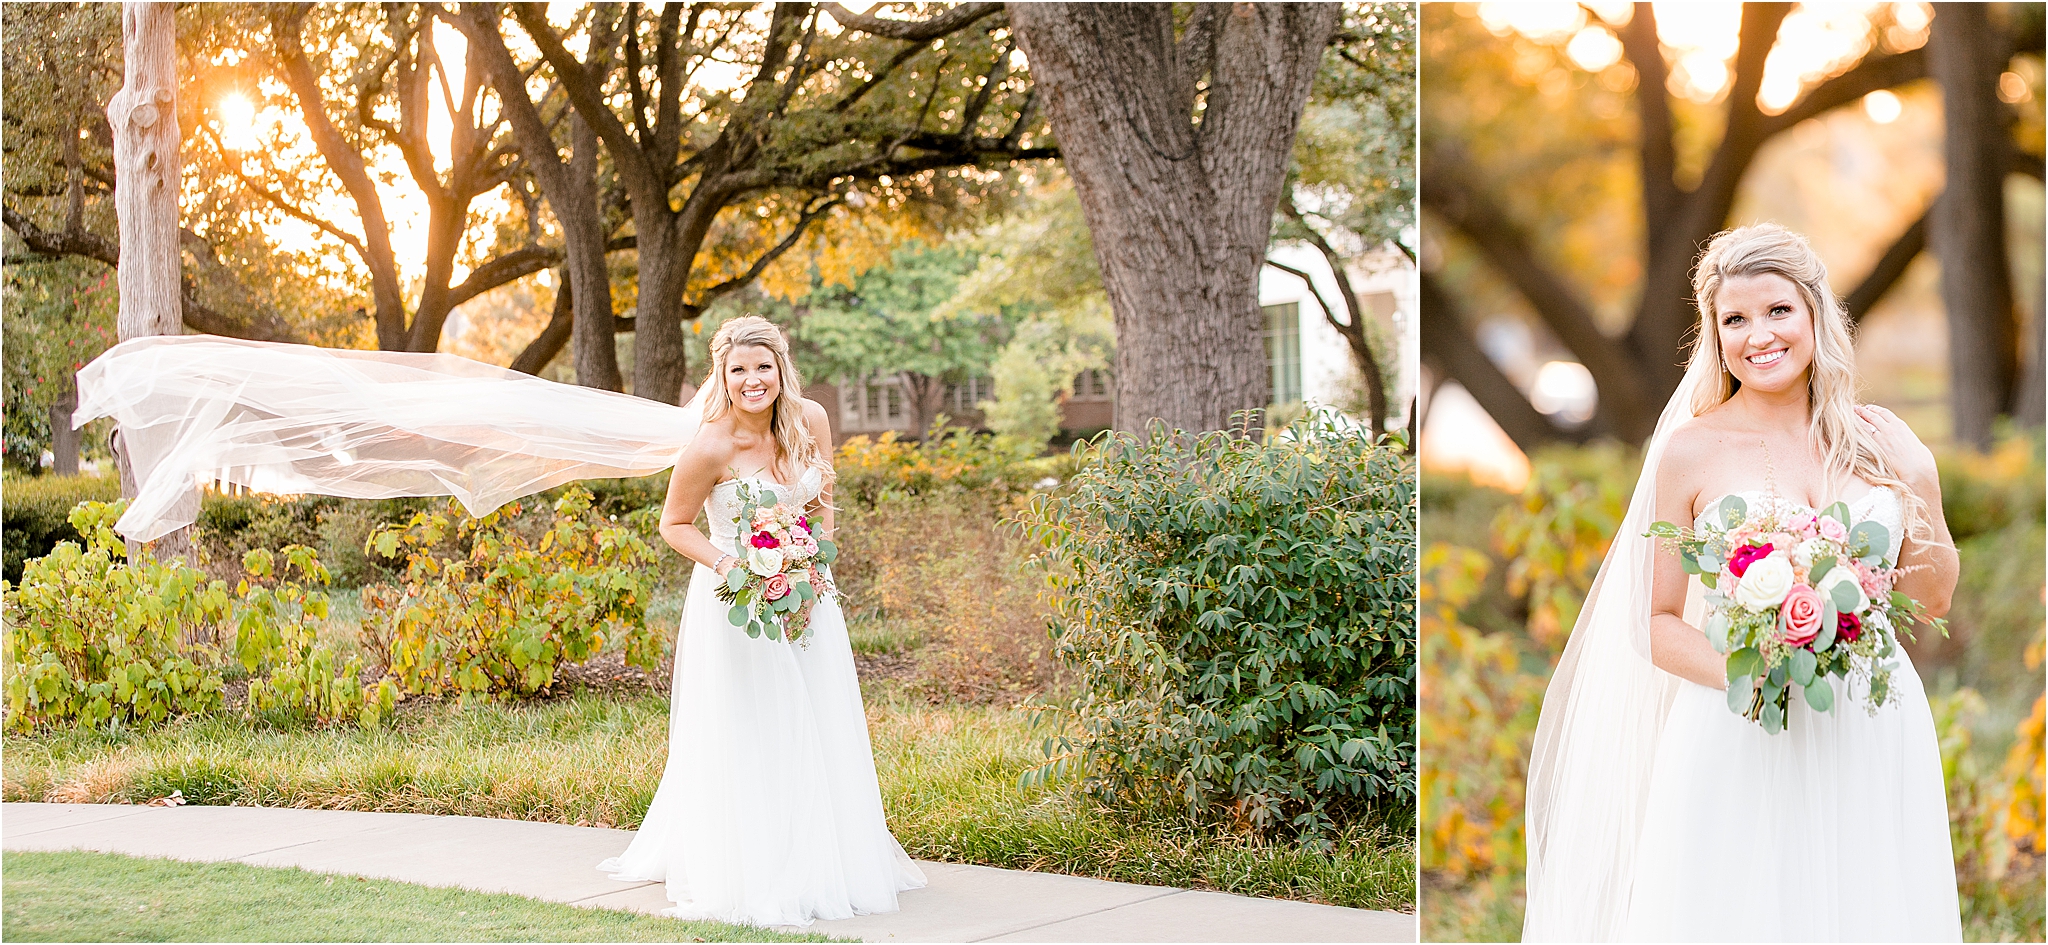 Outdoor Bridal Session in Highland Park by Dallas Wedding Photographer Jillian Hogan 